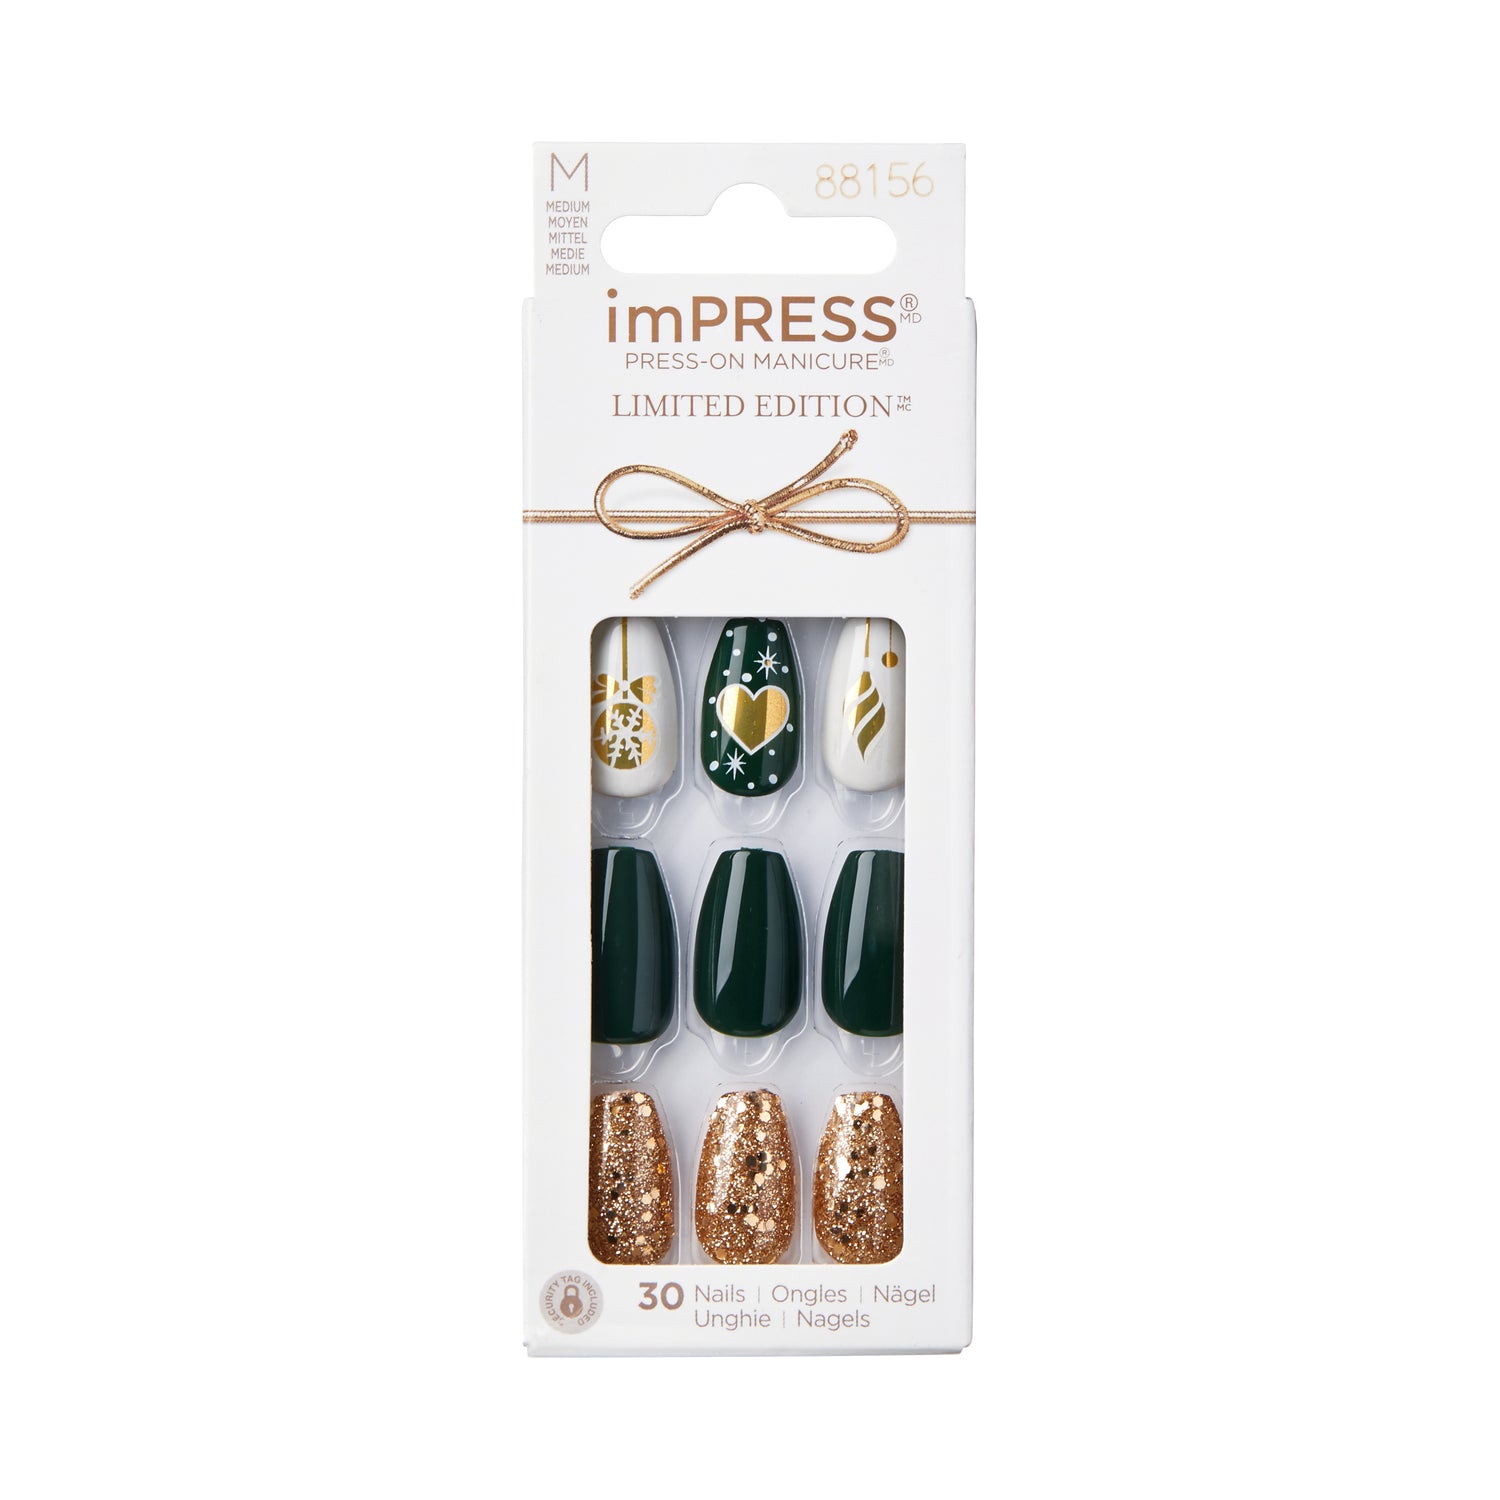 imPRESS Limited-Edition Holiday Press-On Nails - 'Tis the Season